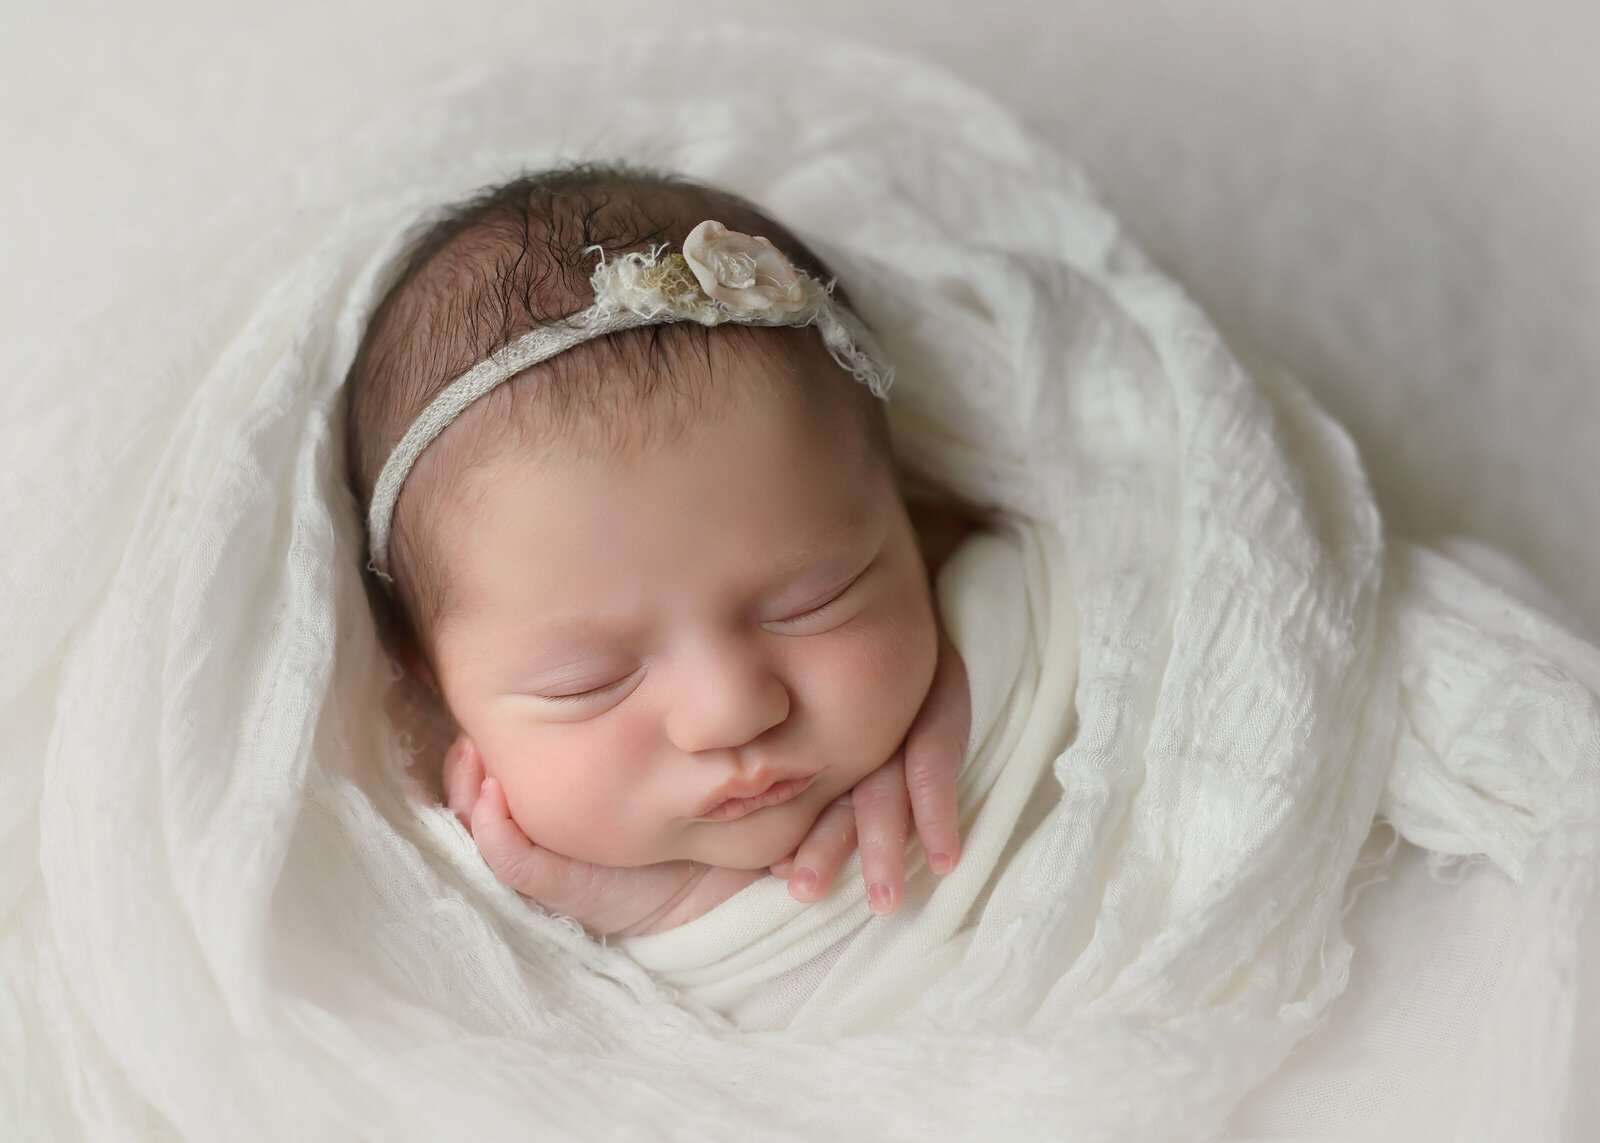 newborn baby girl with headband sleeping and swaddled in cream blanket